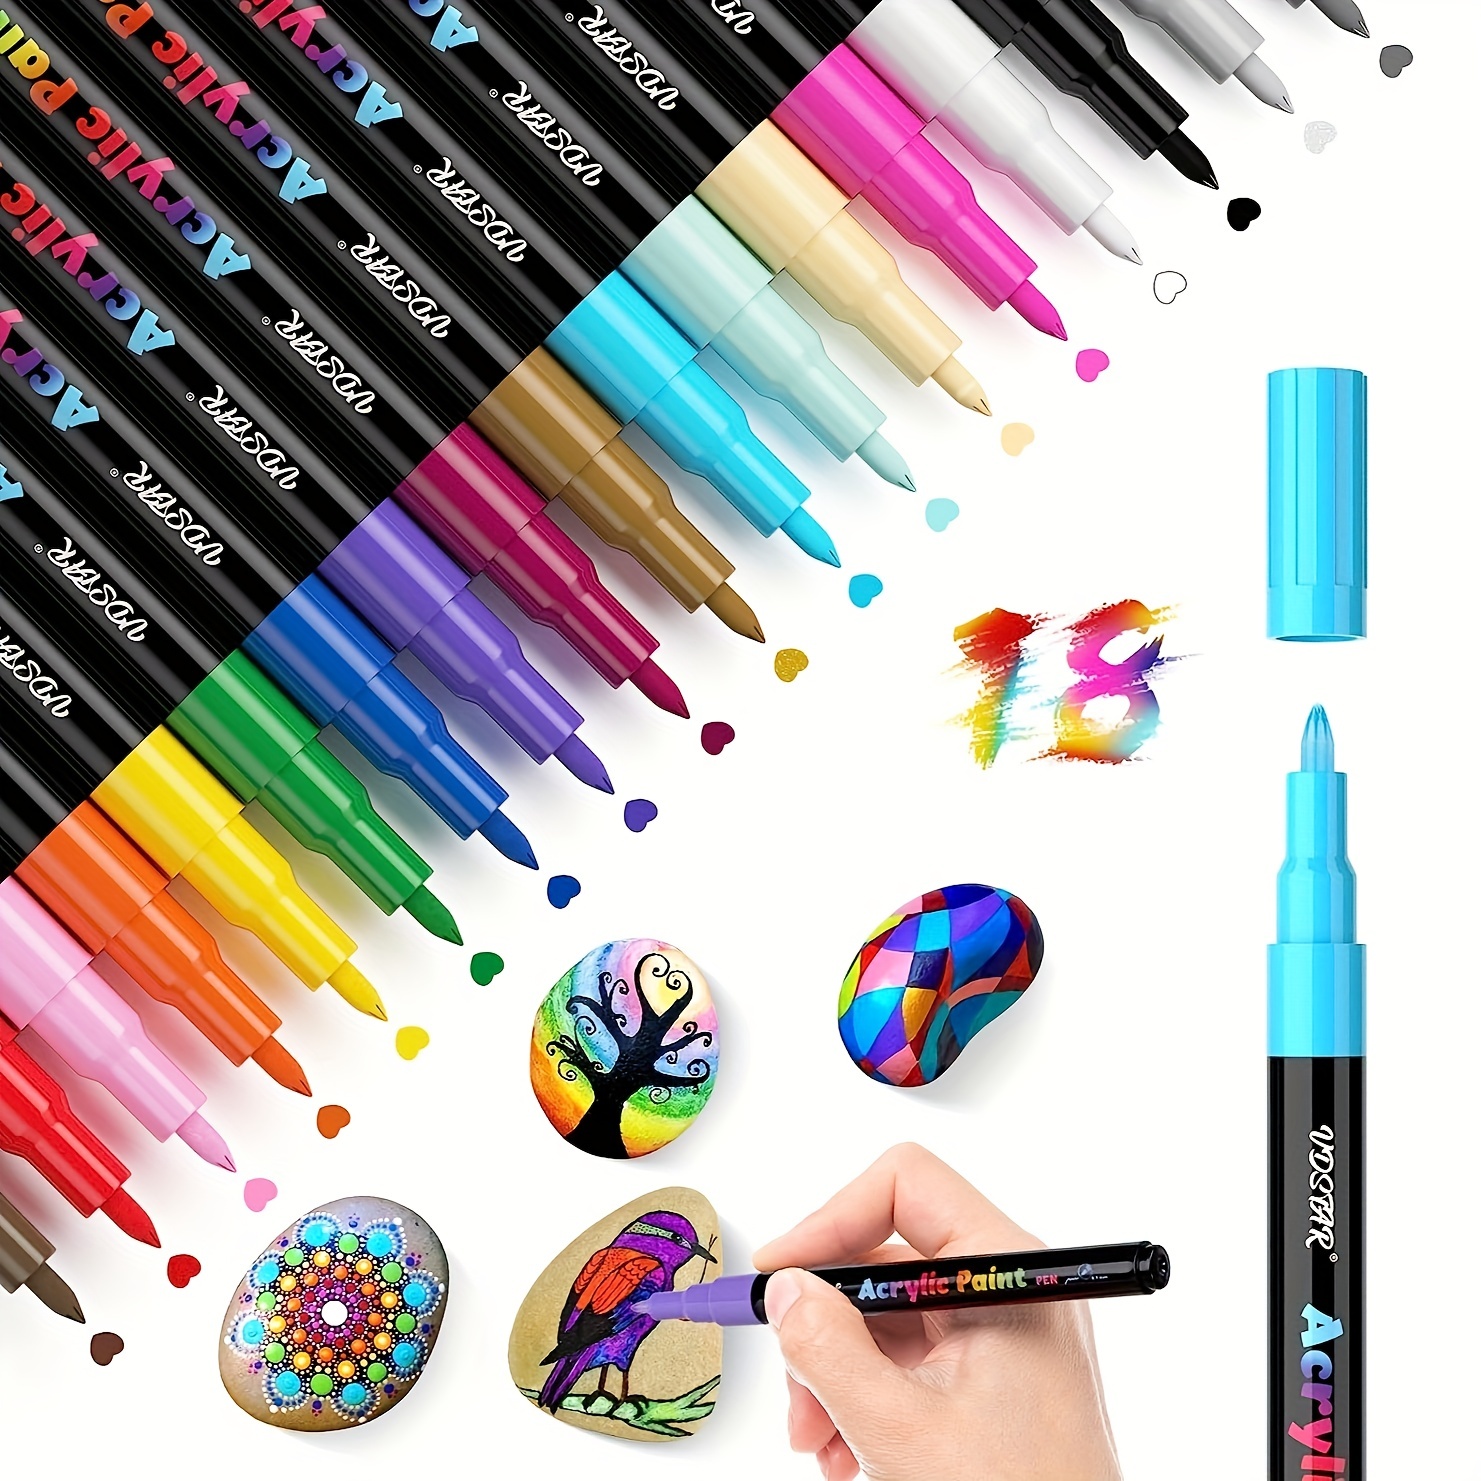  Acrylic Paint Markers, 18 Colors, 0.7mm Fine Tip Art